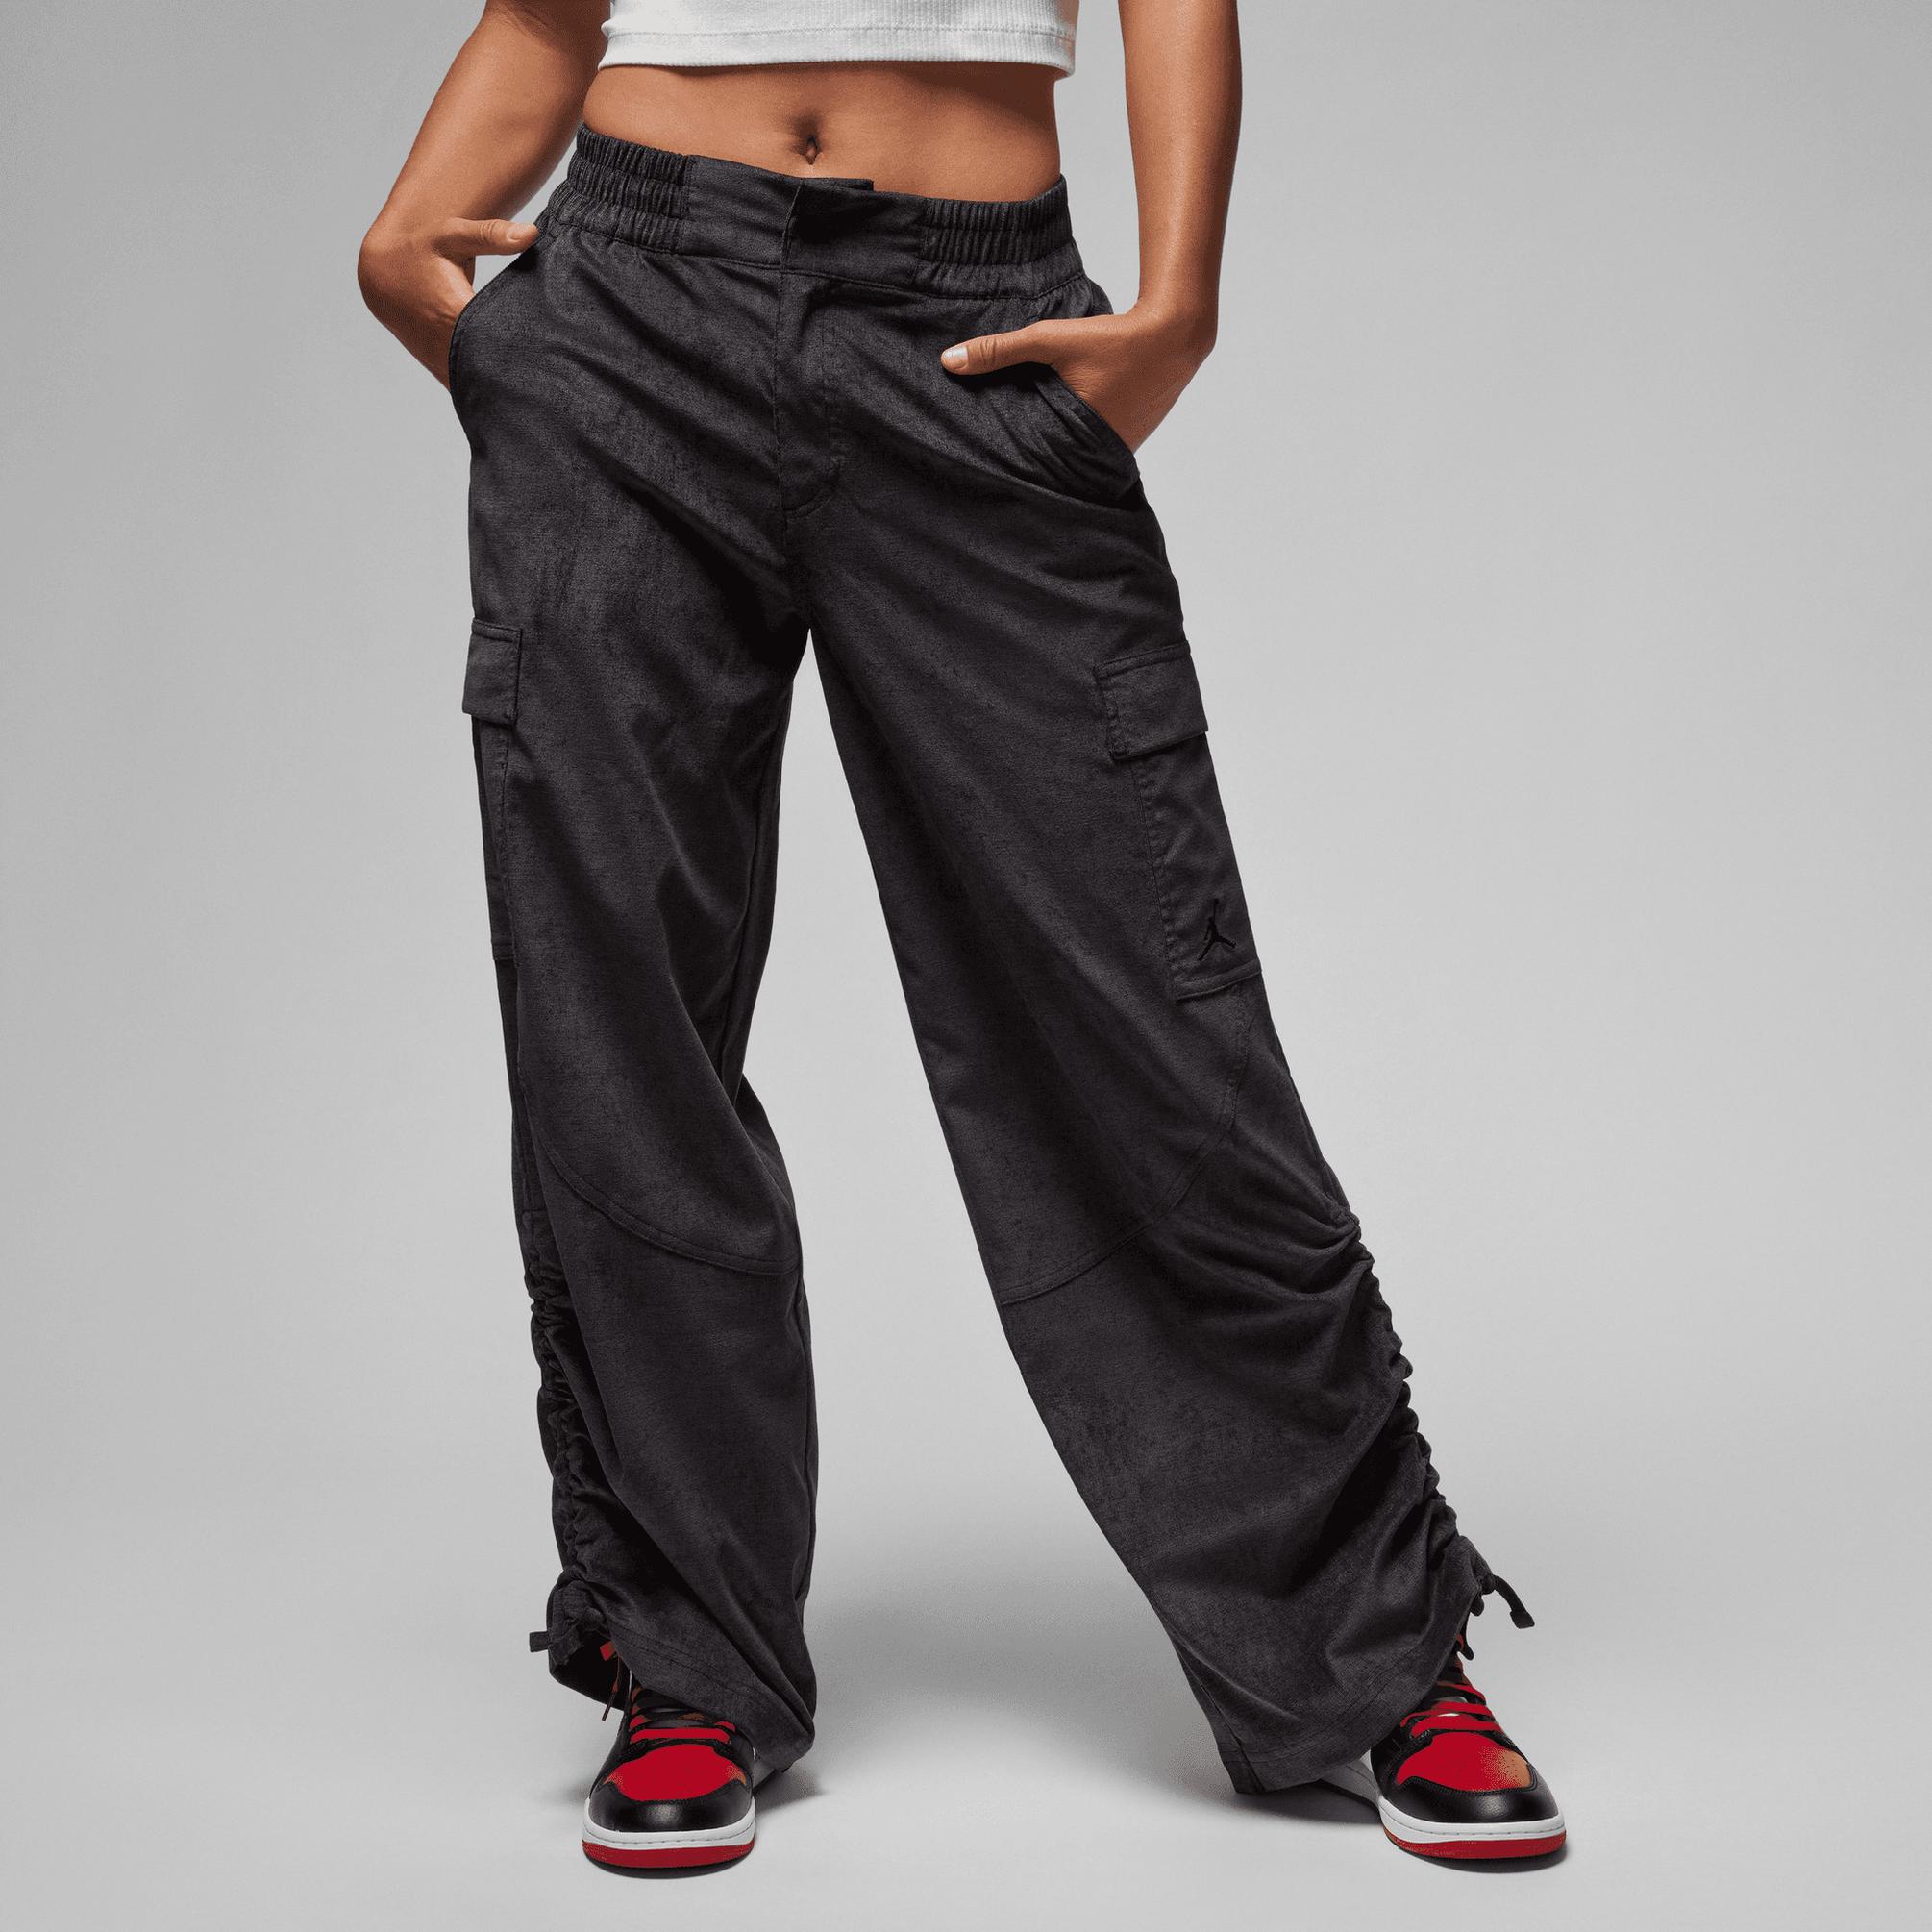  Jordan Chicago Kadın Siyah Kargo Pantolon